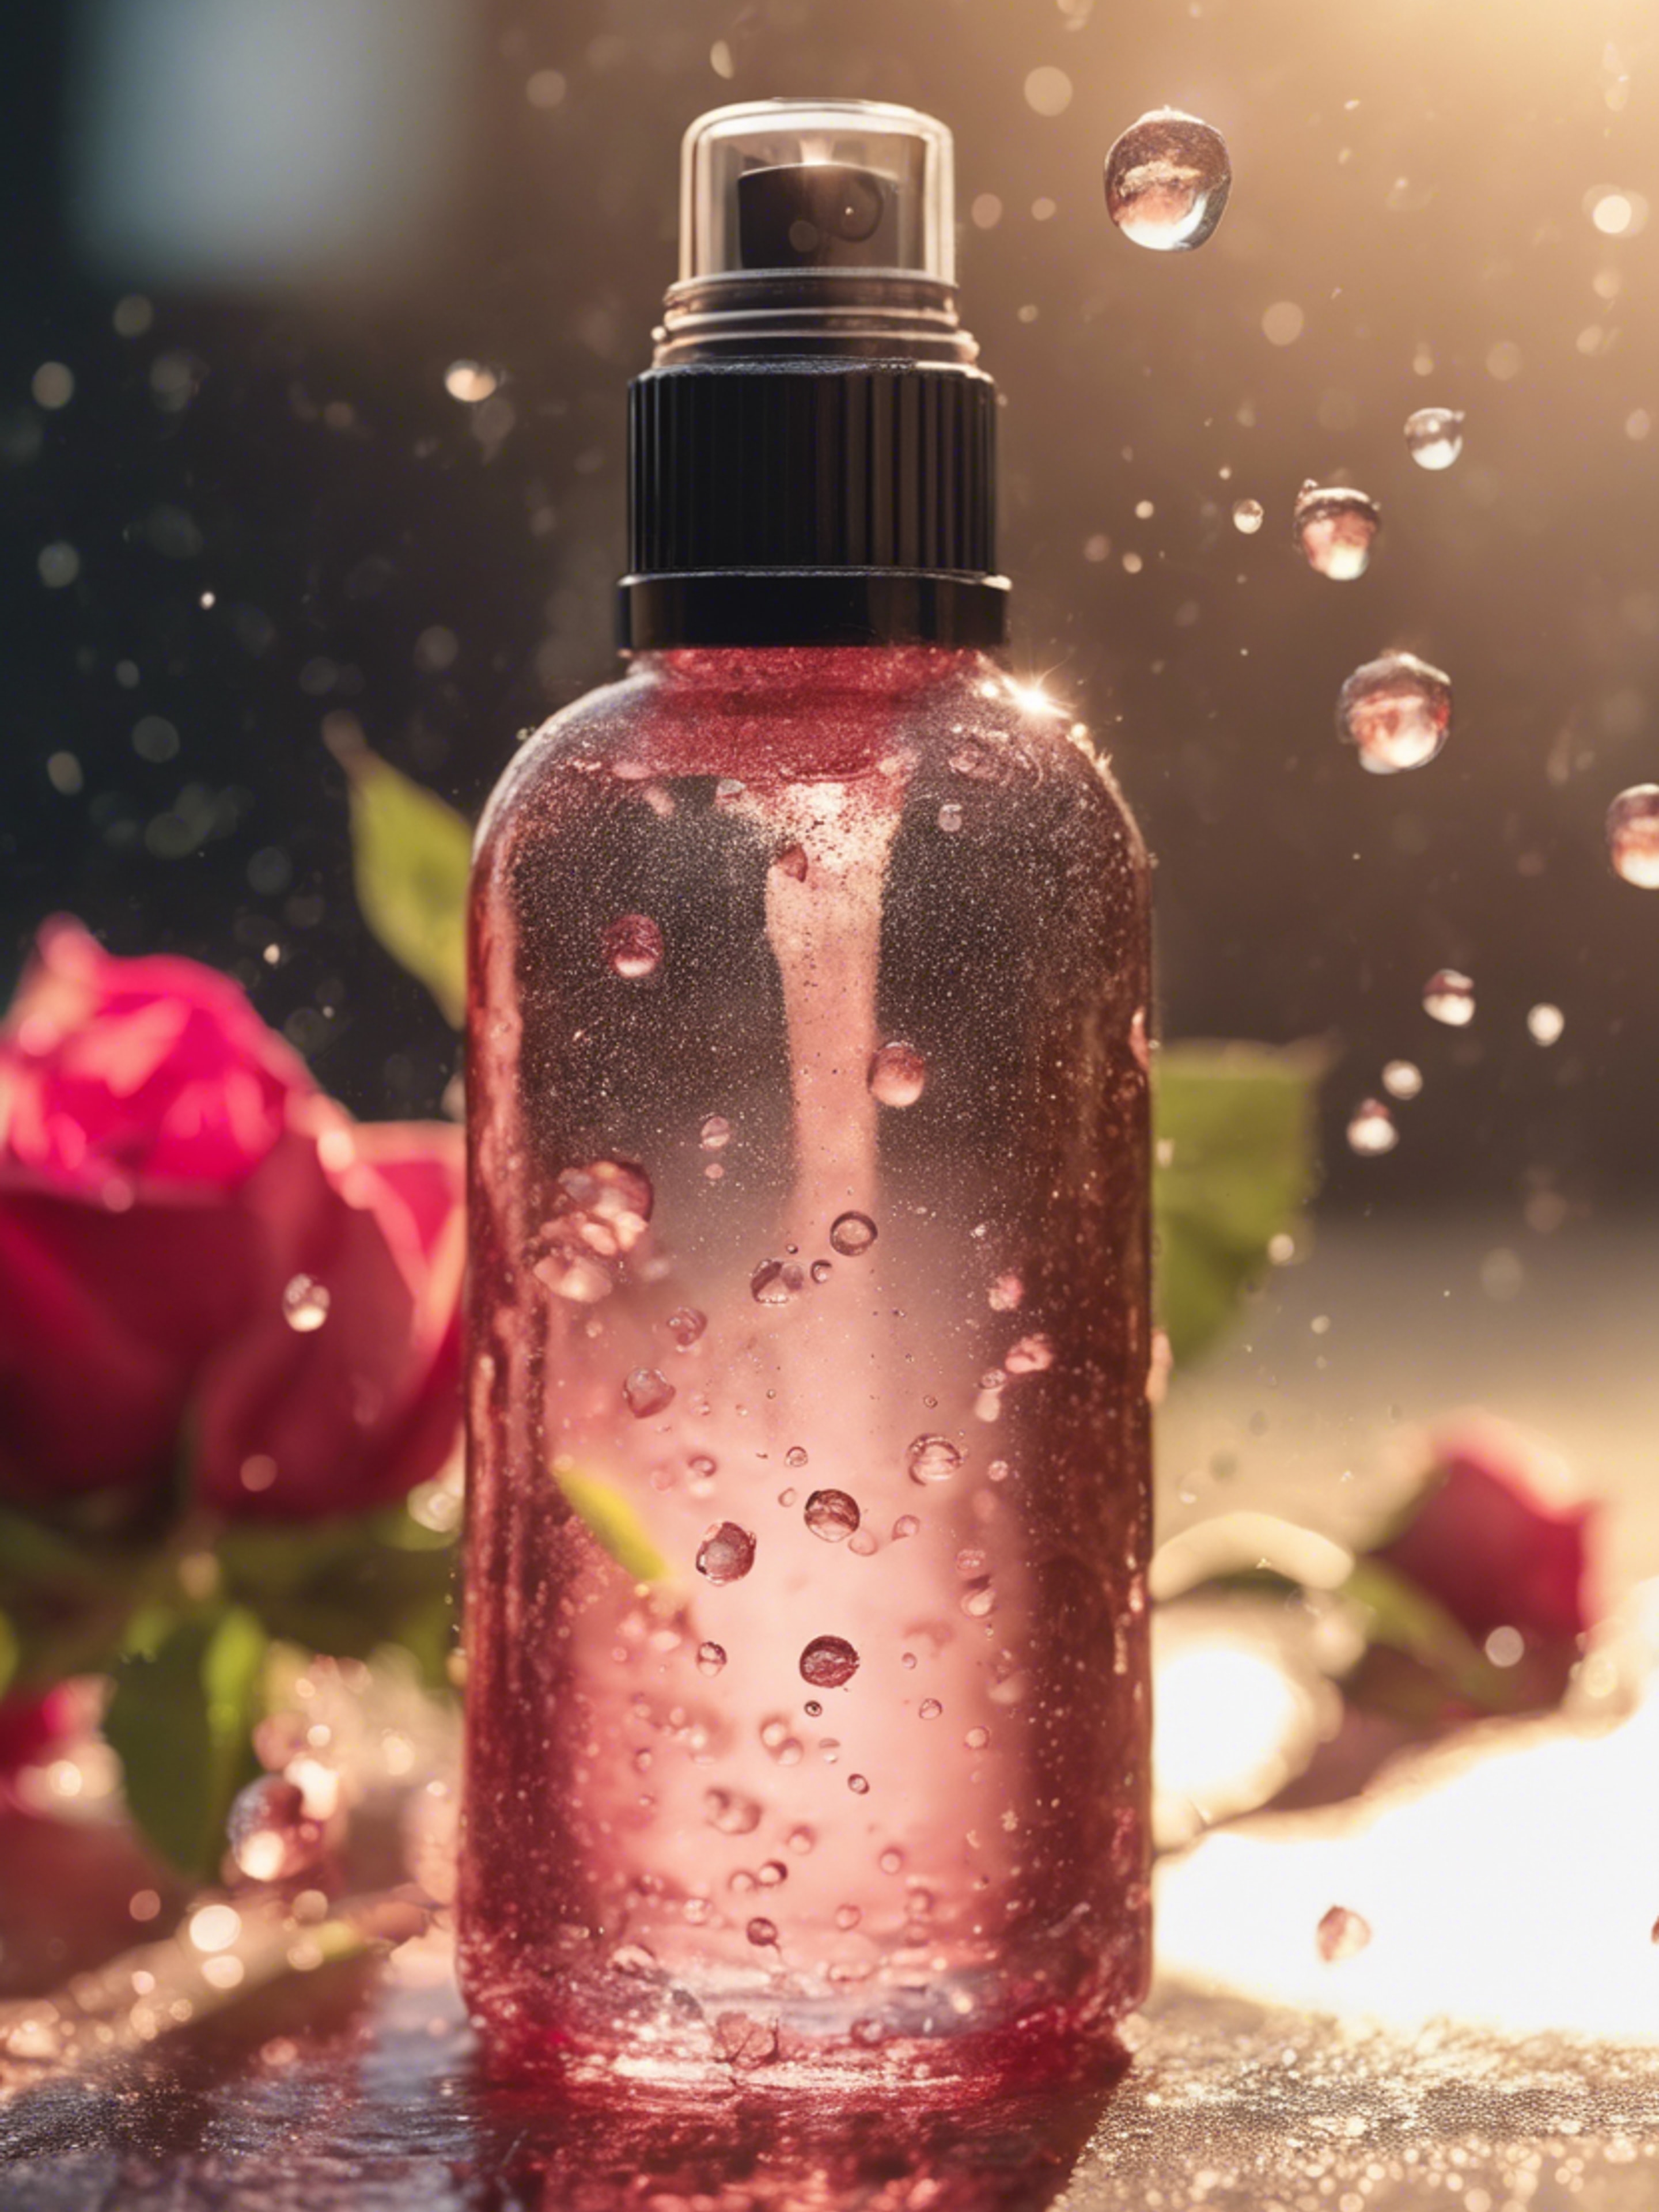 A refreshing spray bottle of rose water toner sprinkling droplets in the sunlight. duvar kağıdı[f1b2cb92d7c7439692a8]